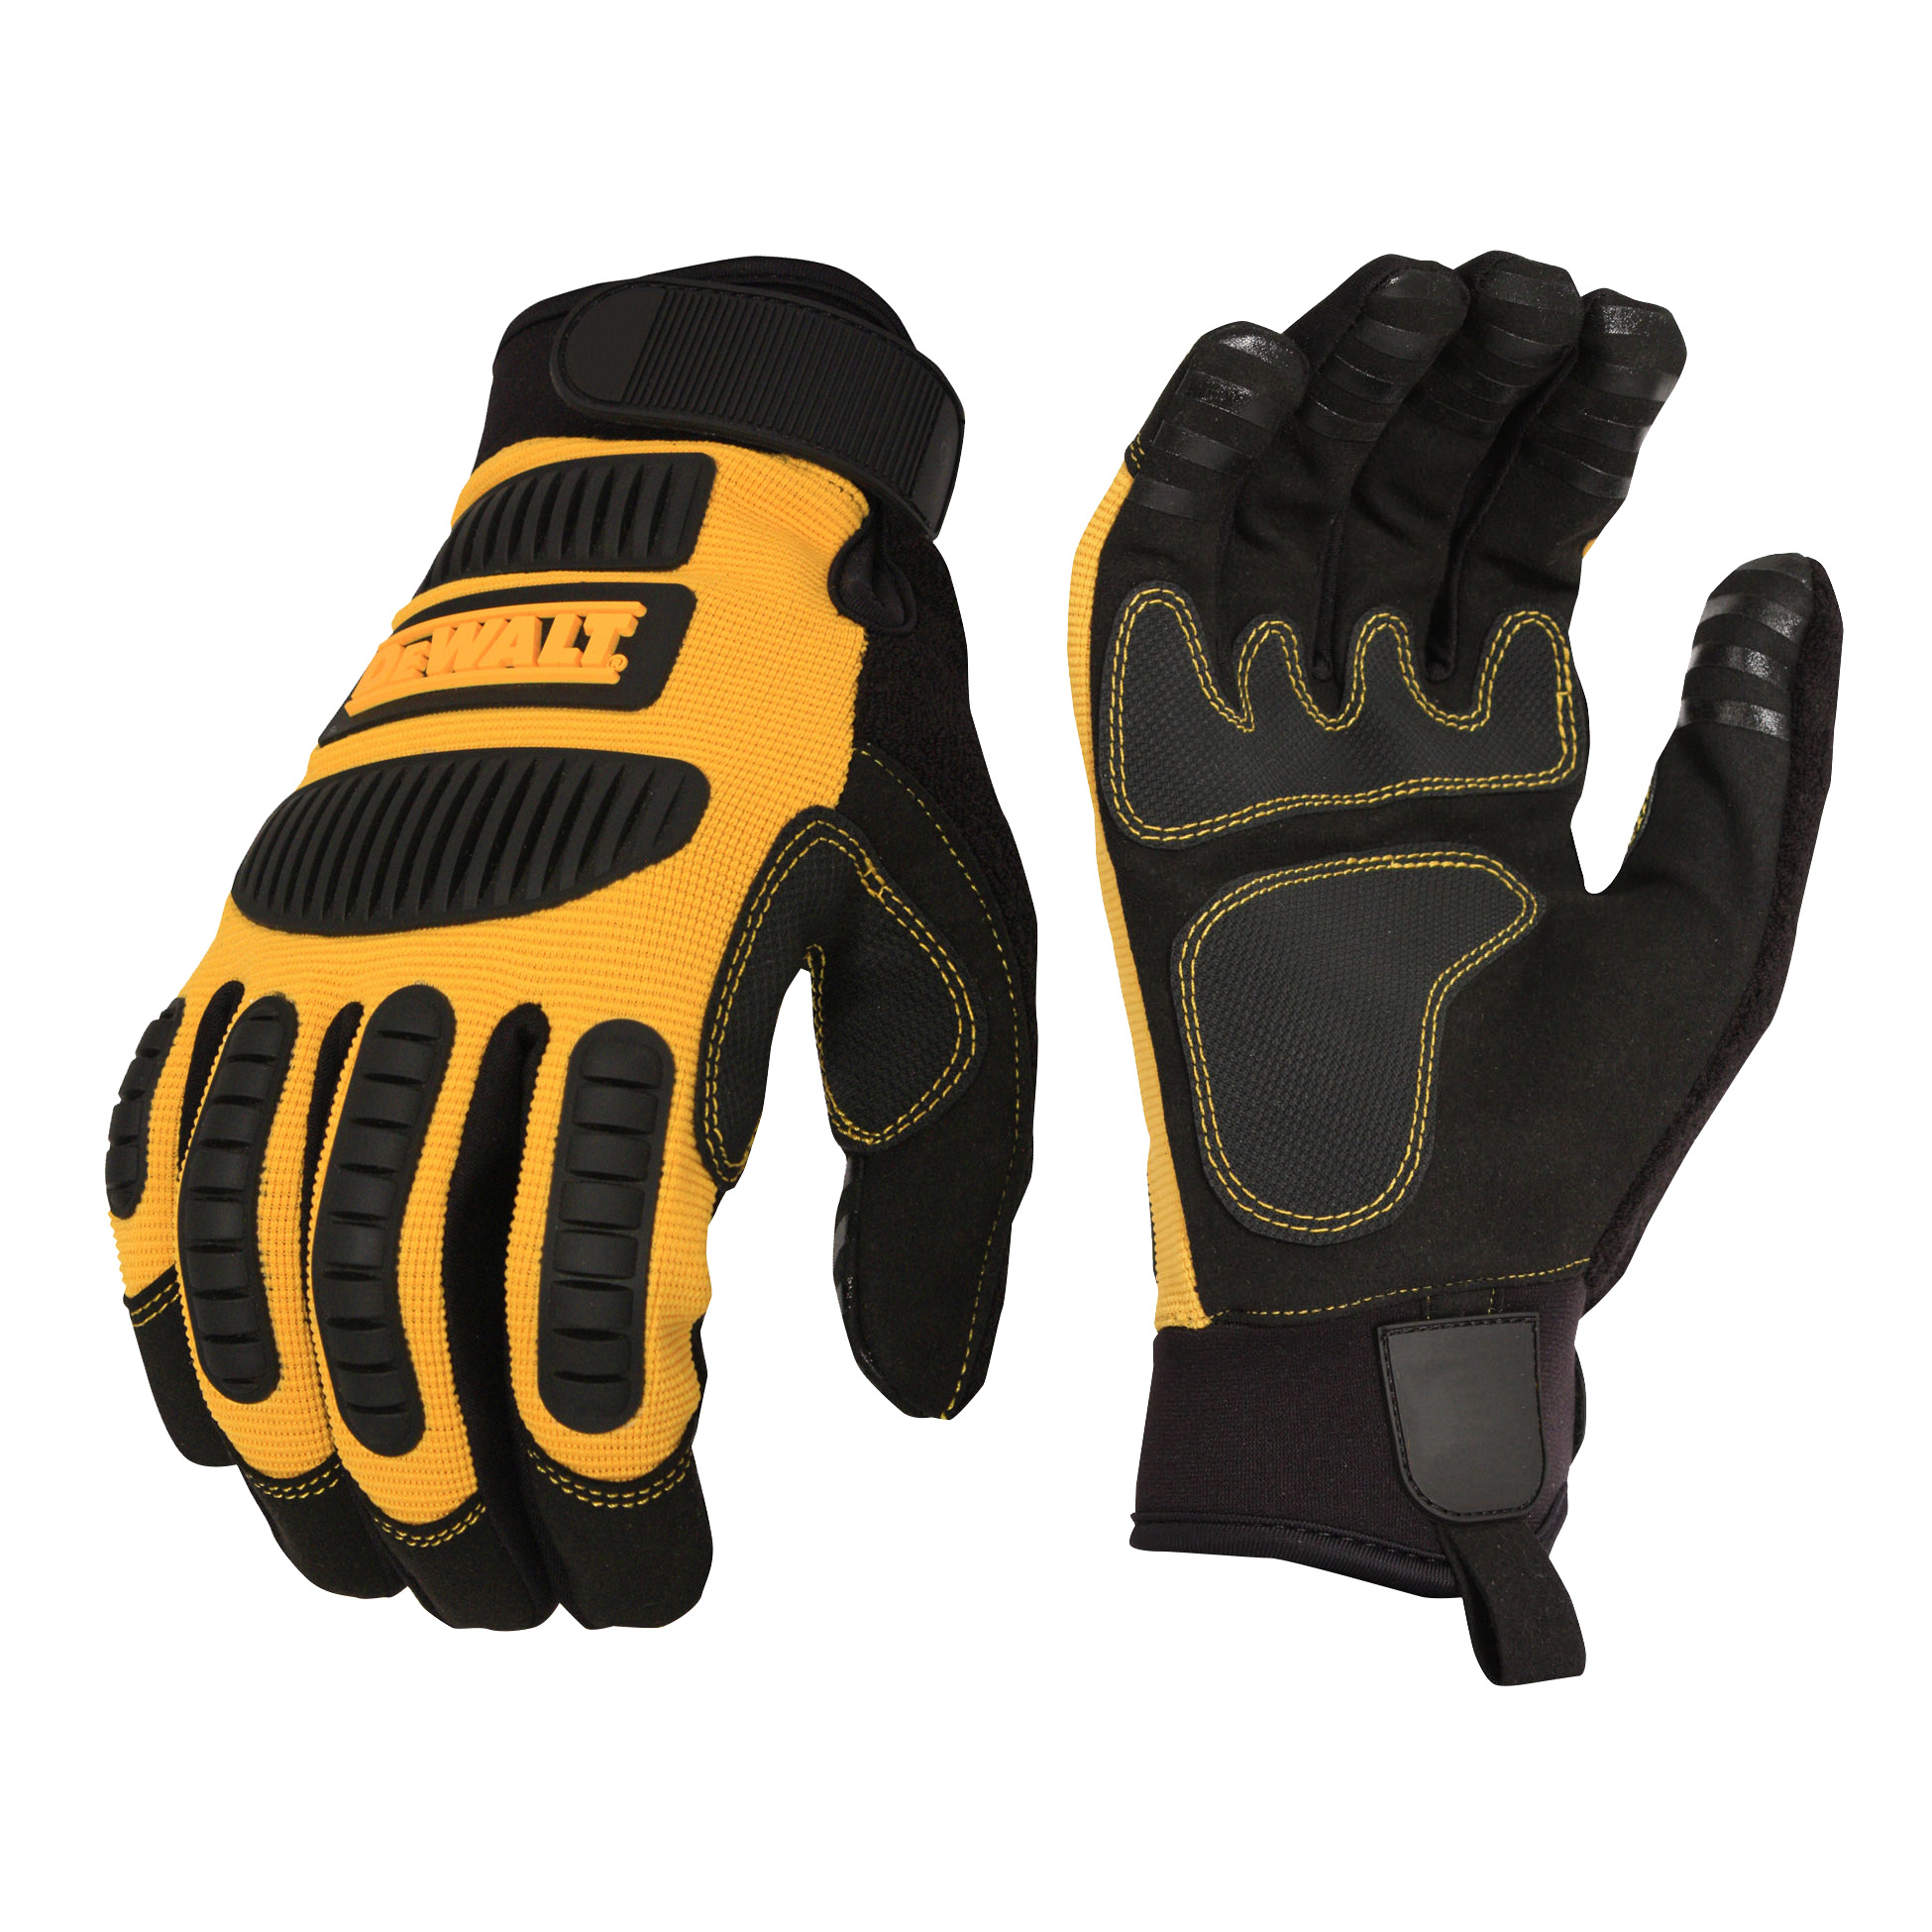 DPG780 Performance Mechanic Work Glove - Size L - Mechanic Work Gloves